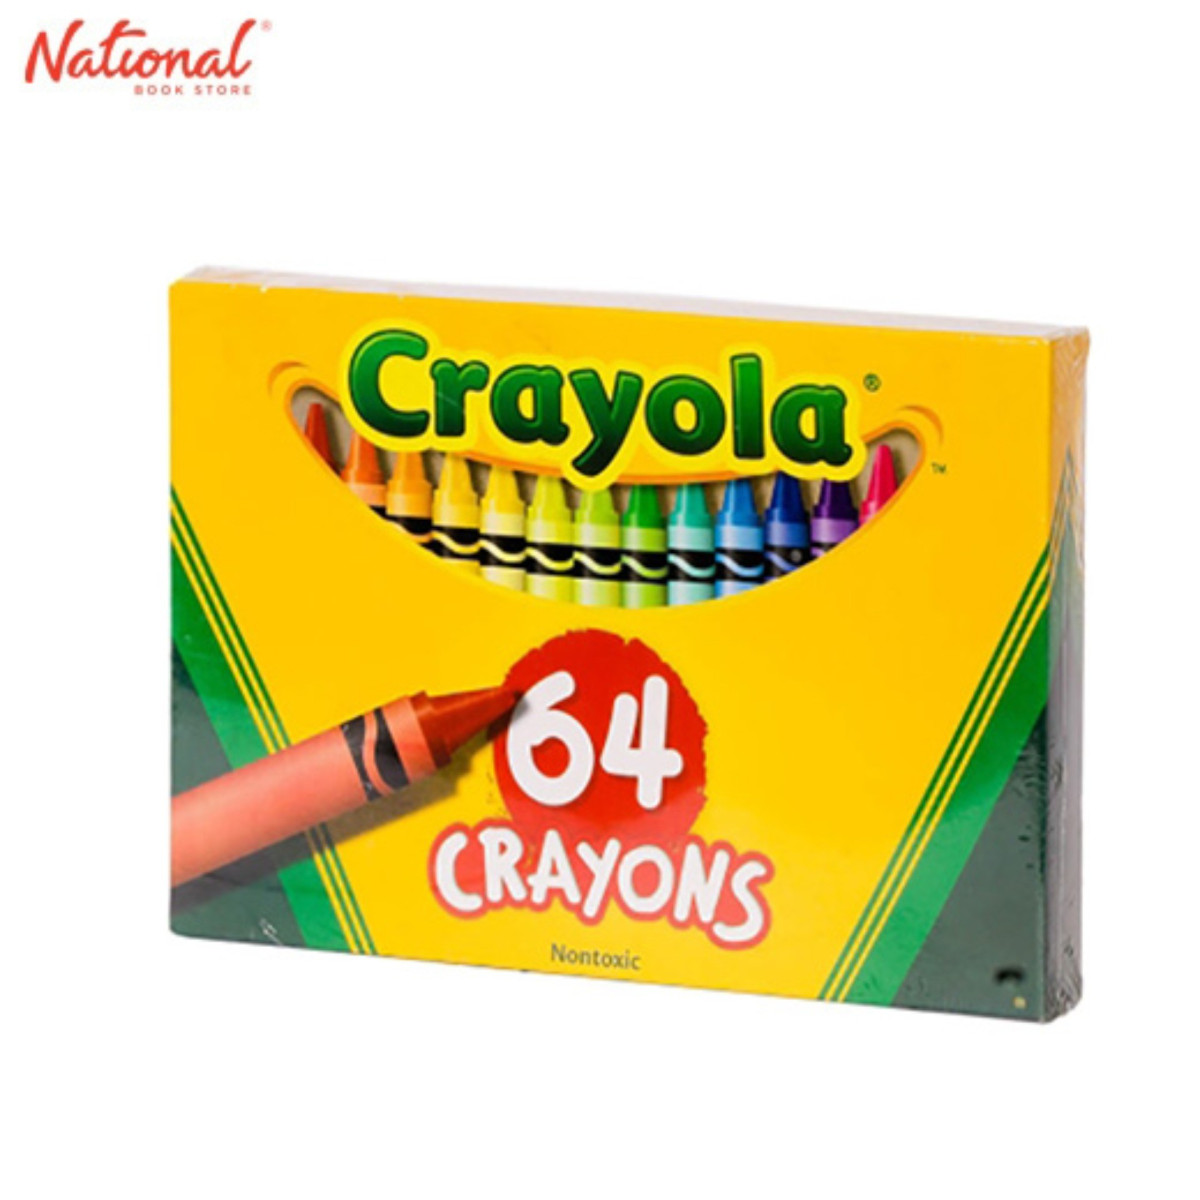 CRAYOLA CLASSIC CRAYON 64 COLORS